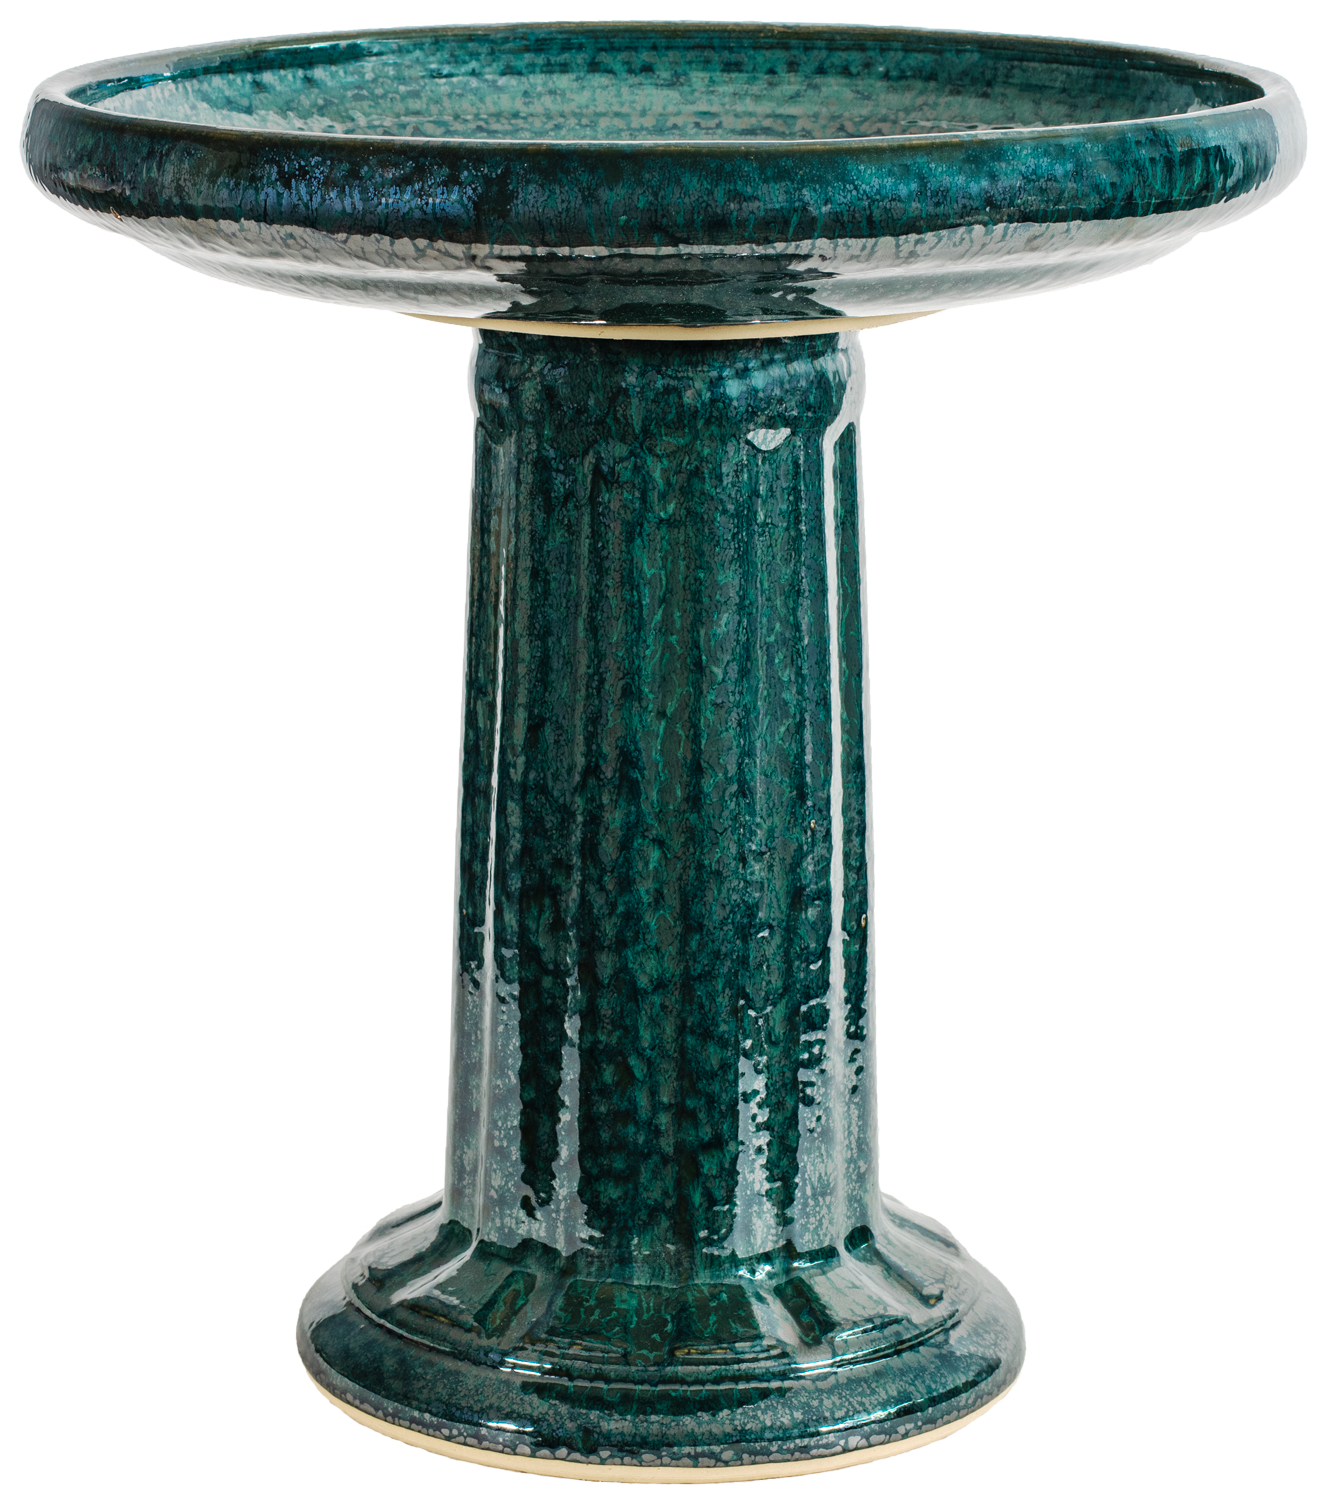 Ceramic green birdbath set with modern clean column design